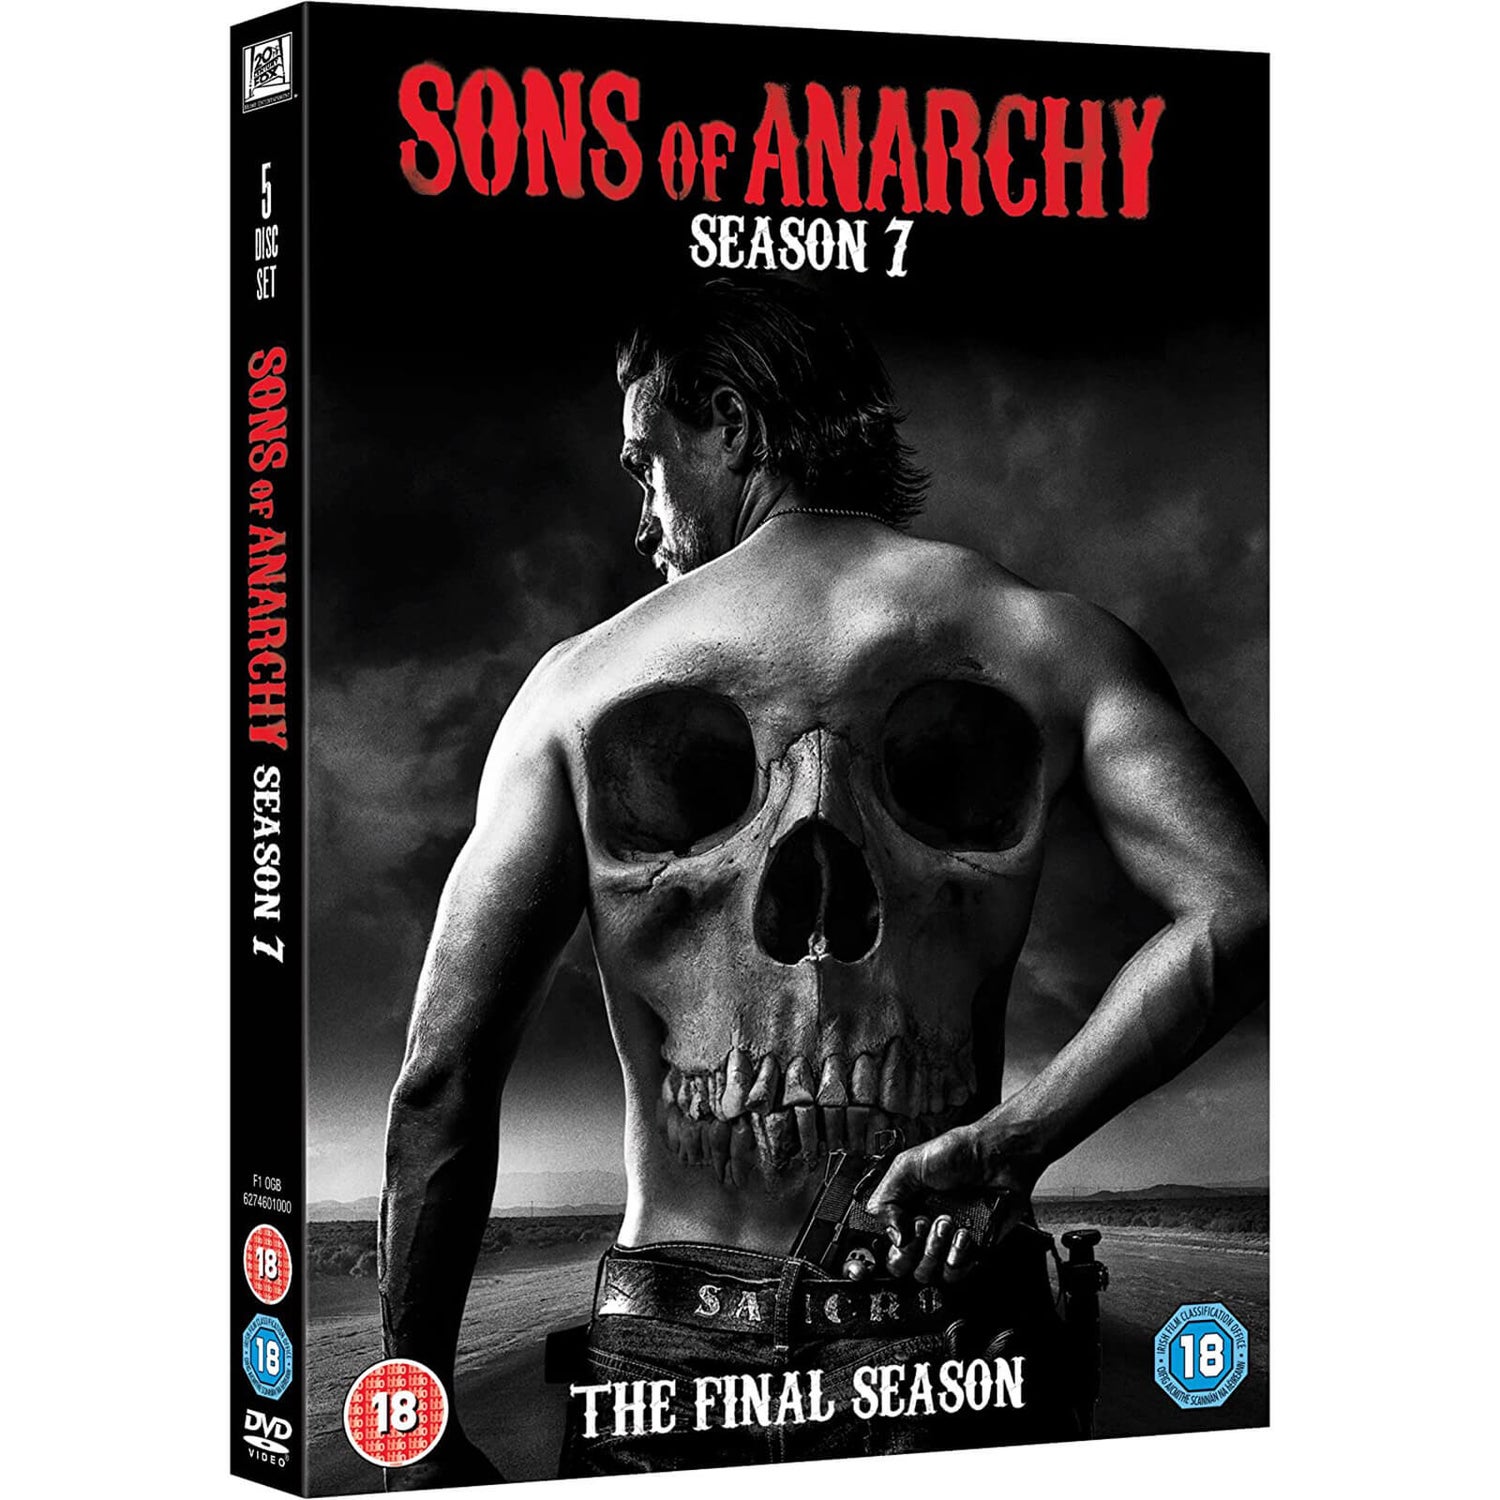 Sons of Anarchy Season 7